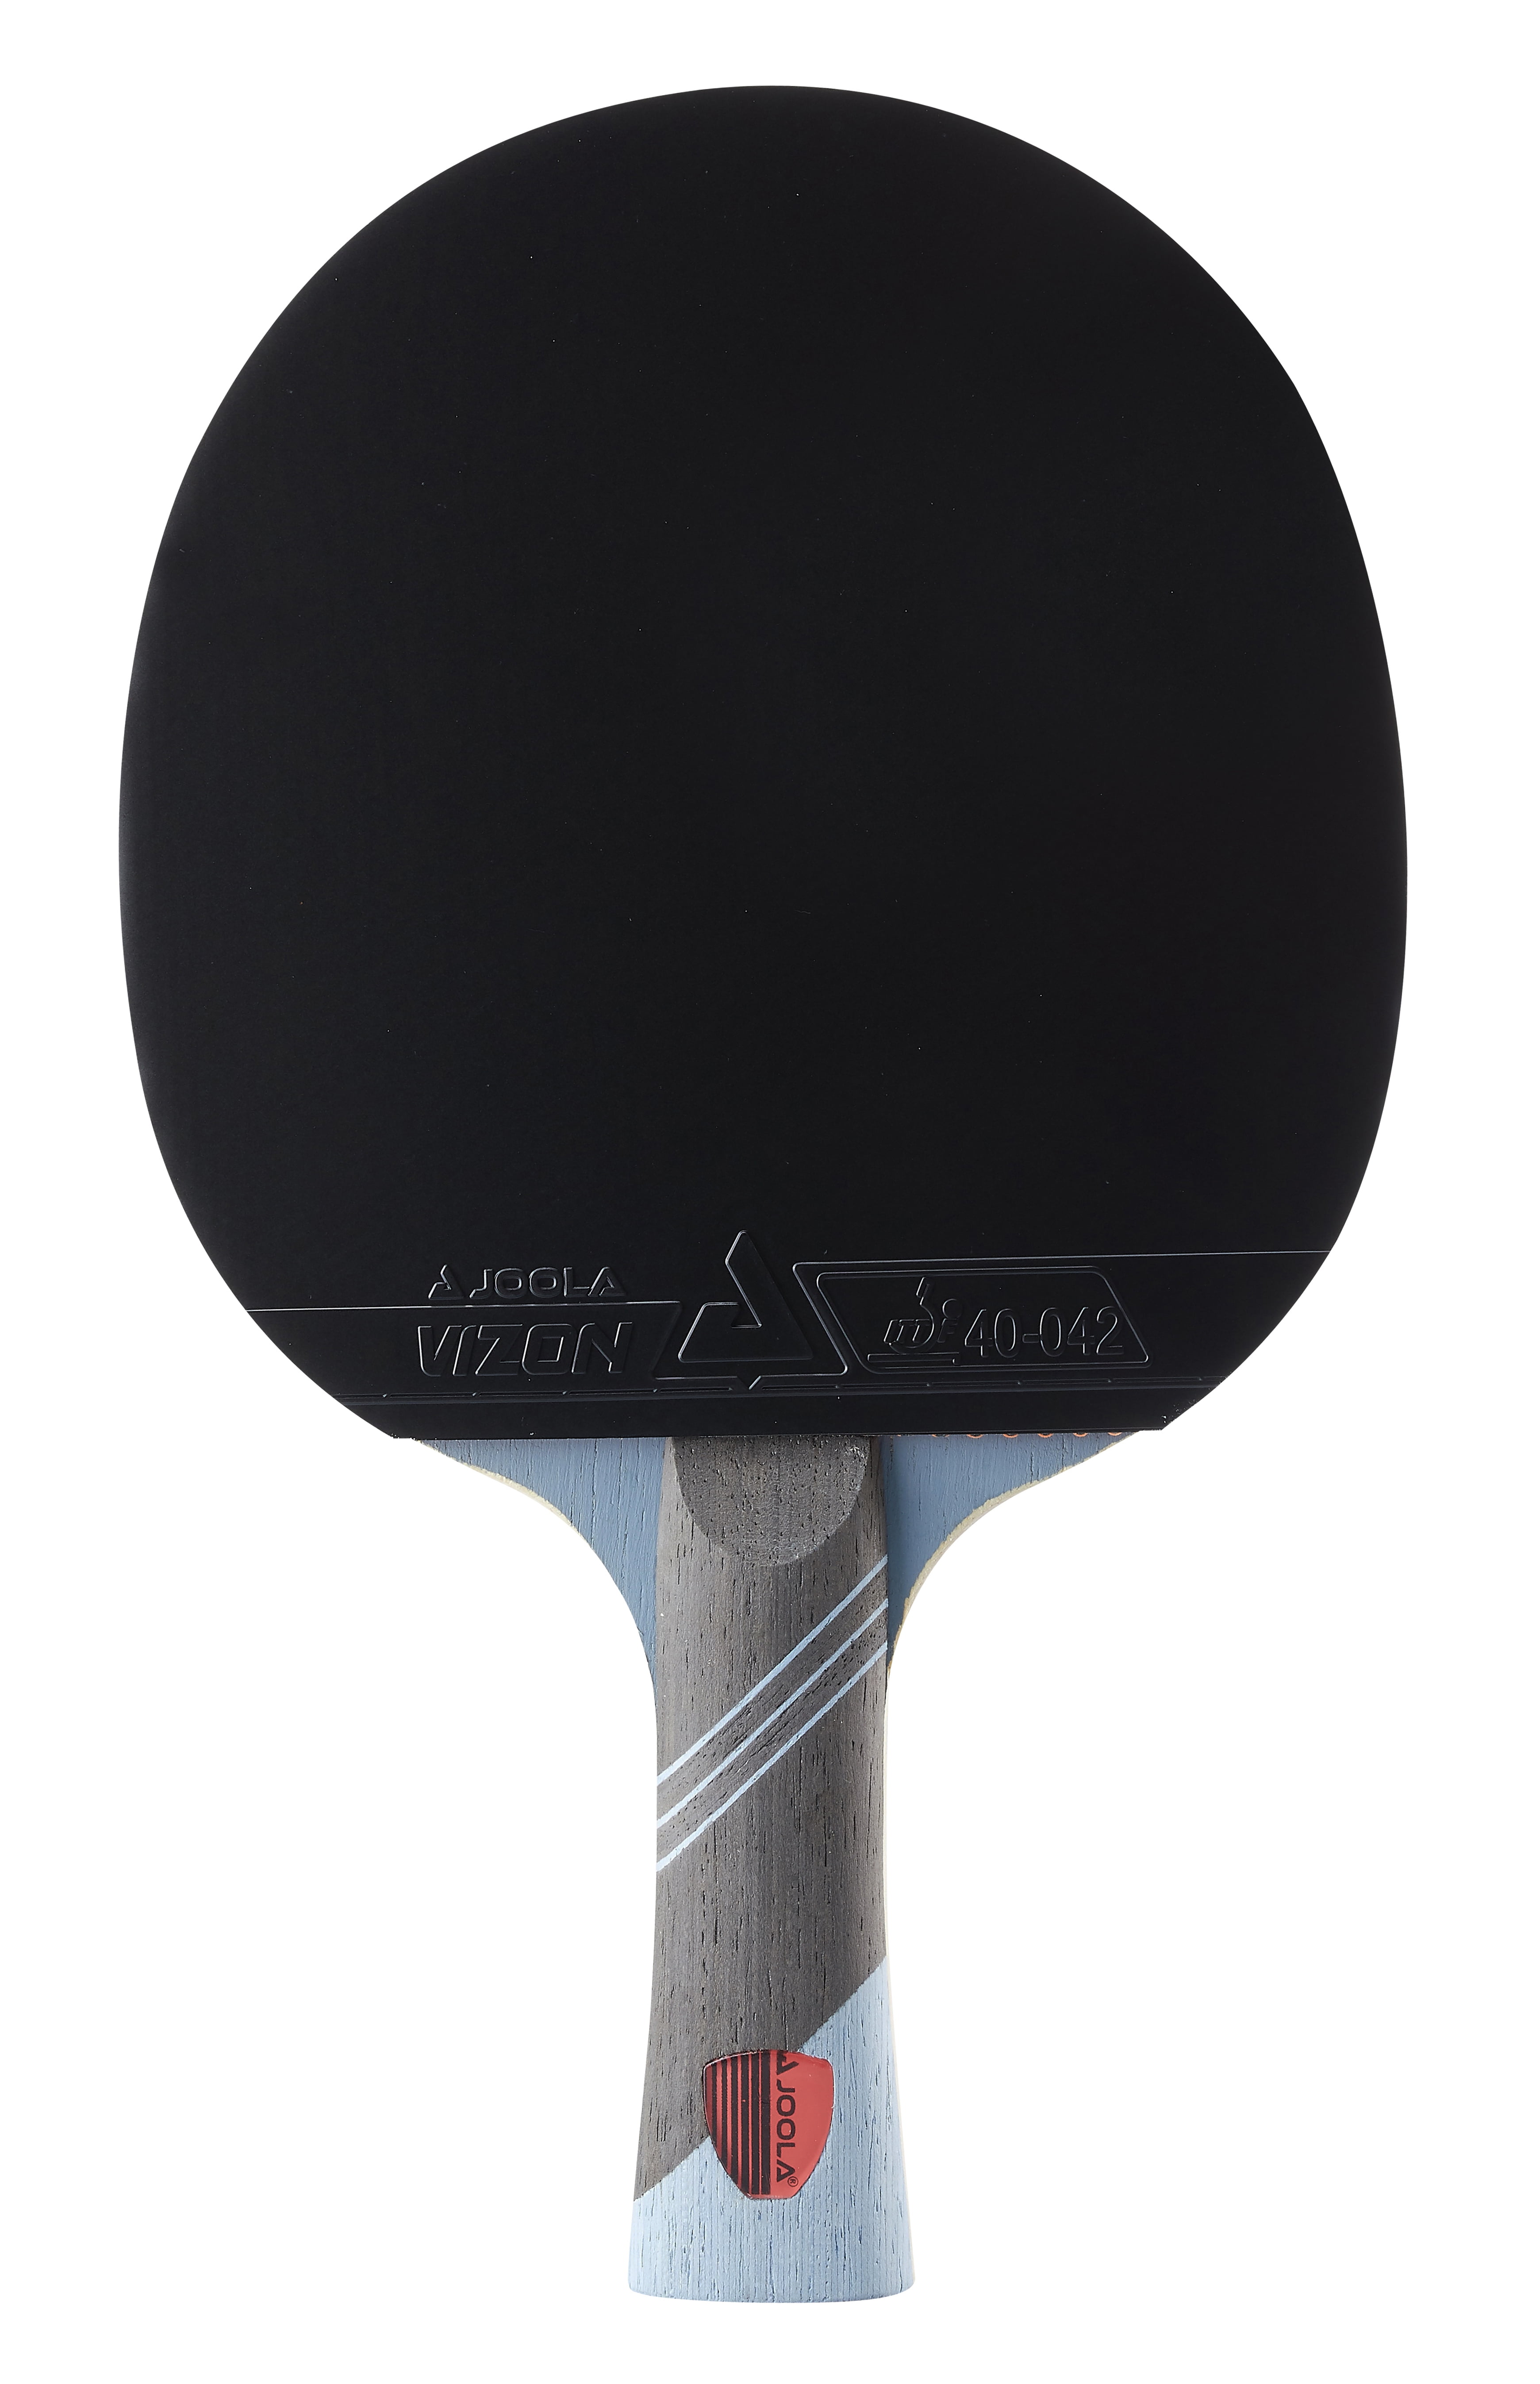 JOOLA Omega Control Table Tennis Racket with Flared Handle